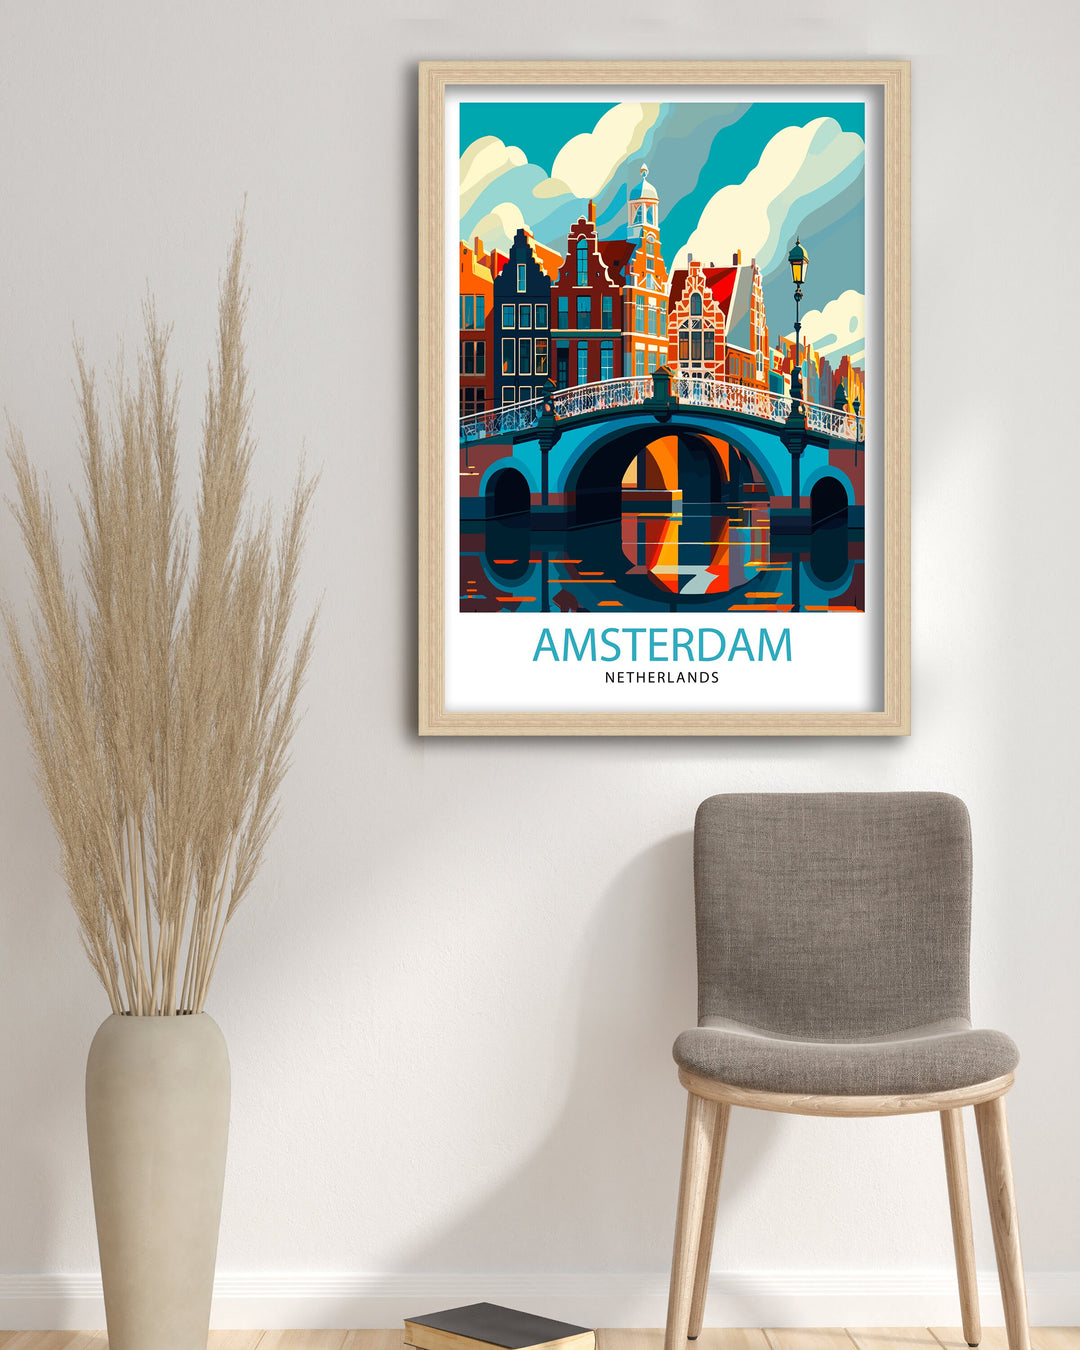 Amsterdam Travel Poster Amsterdam Wall Art Amsterdam Cityscape Netherlands Illustration Amsterdam Travel Poster Gift for Amsterdam Lovers